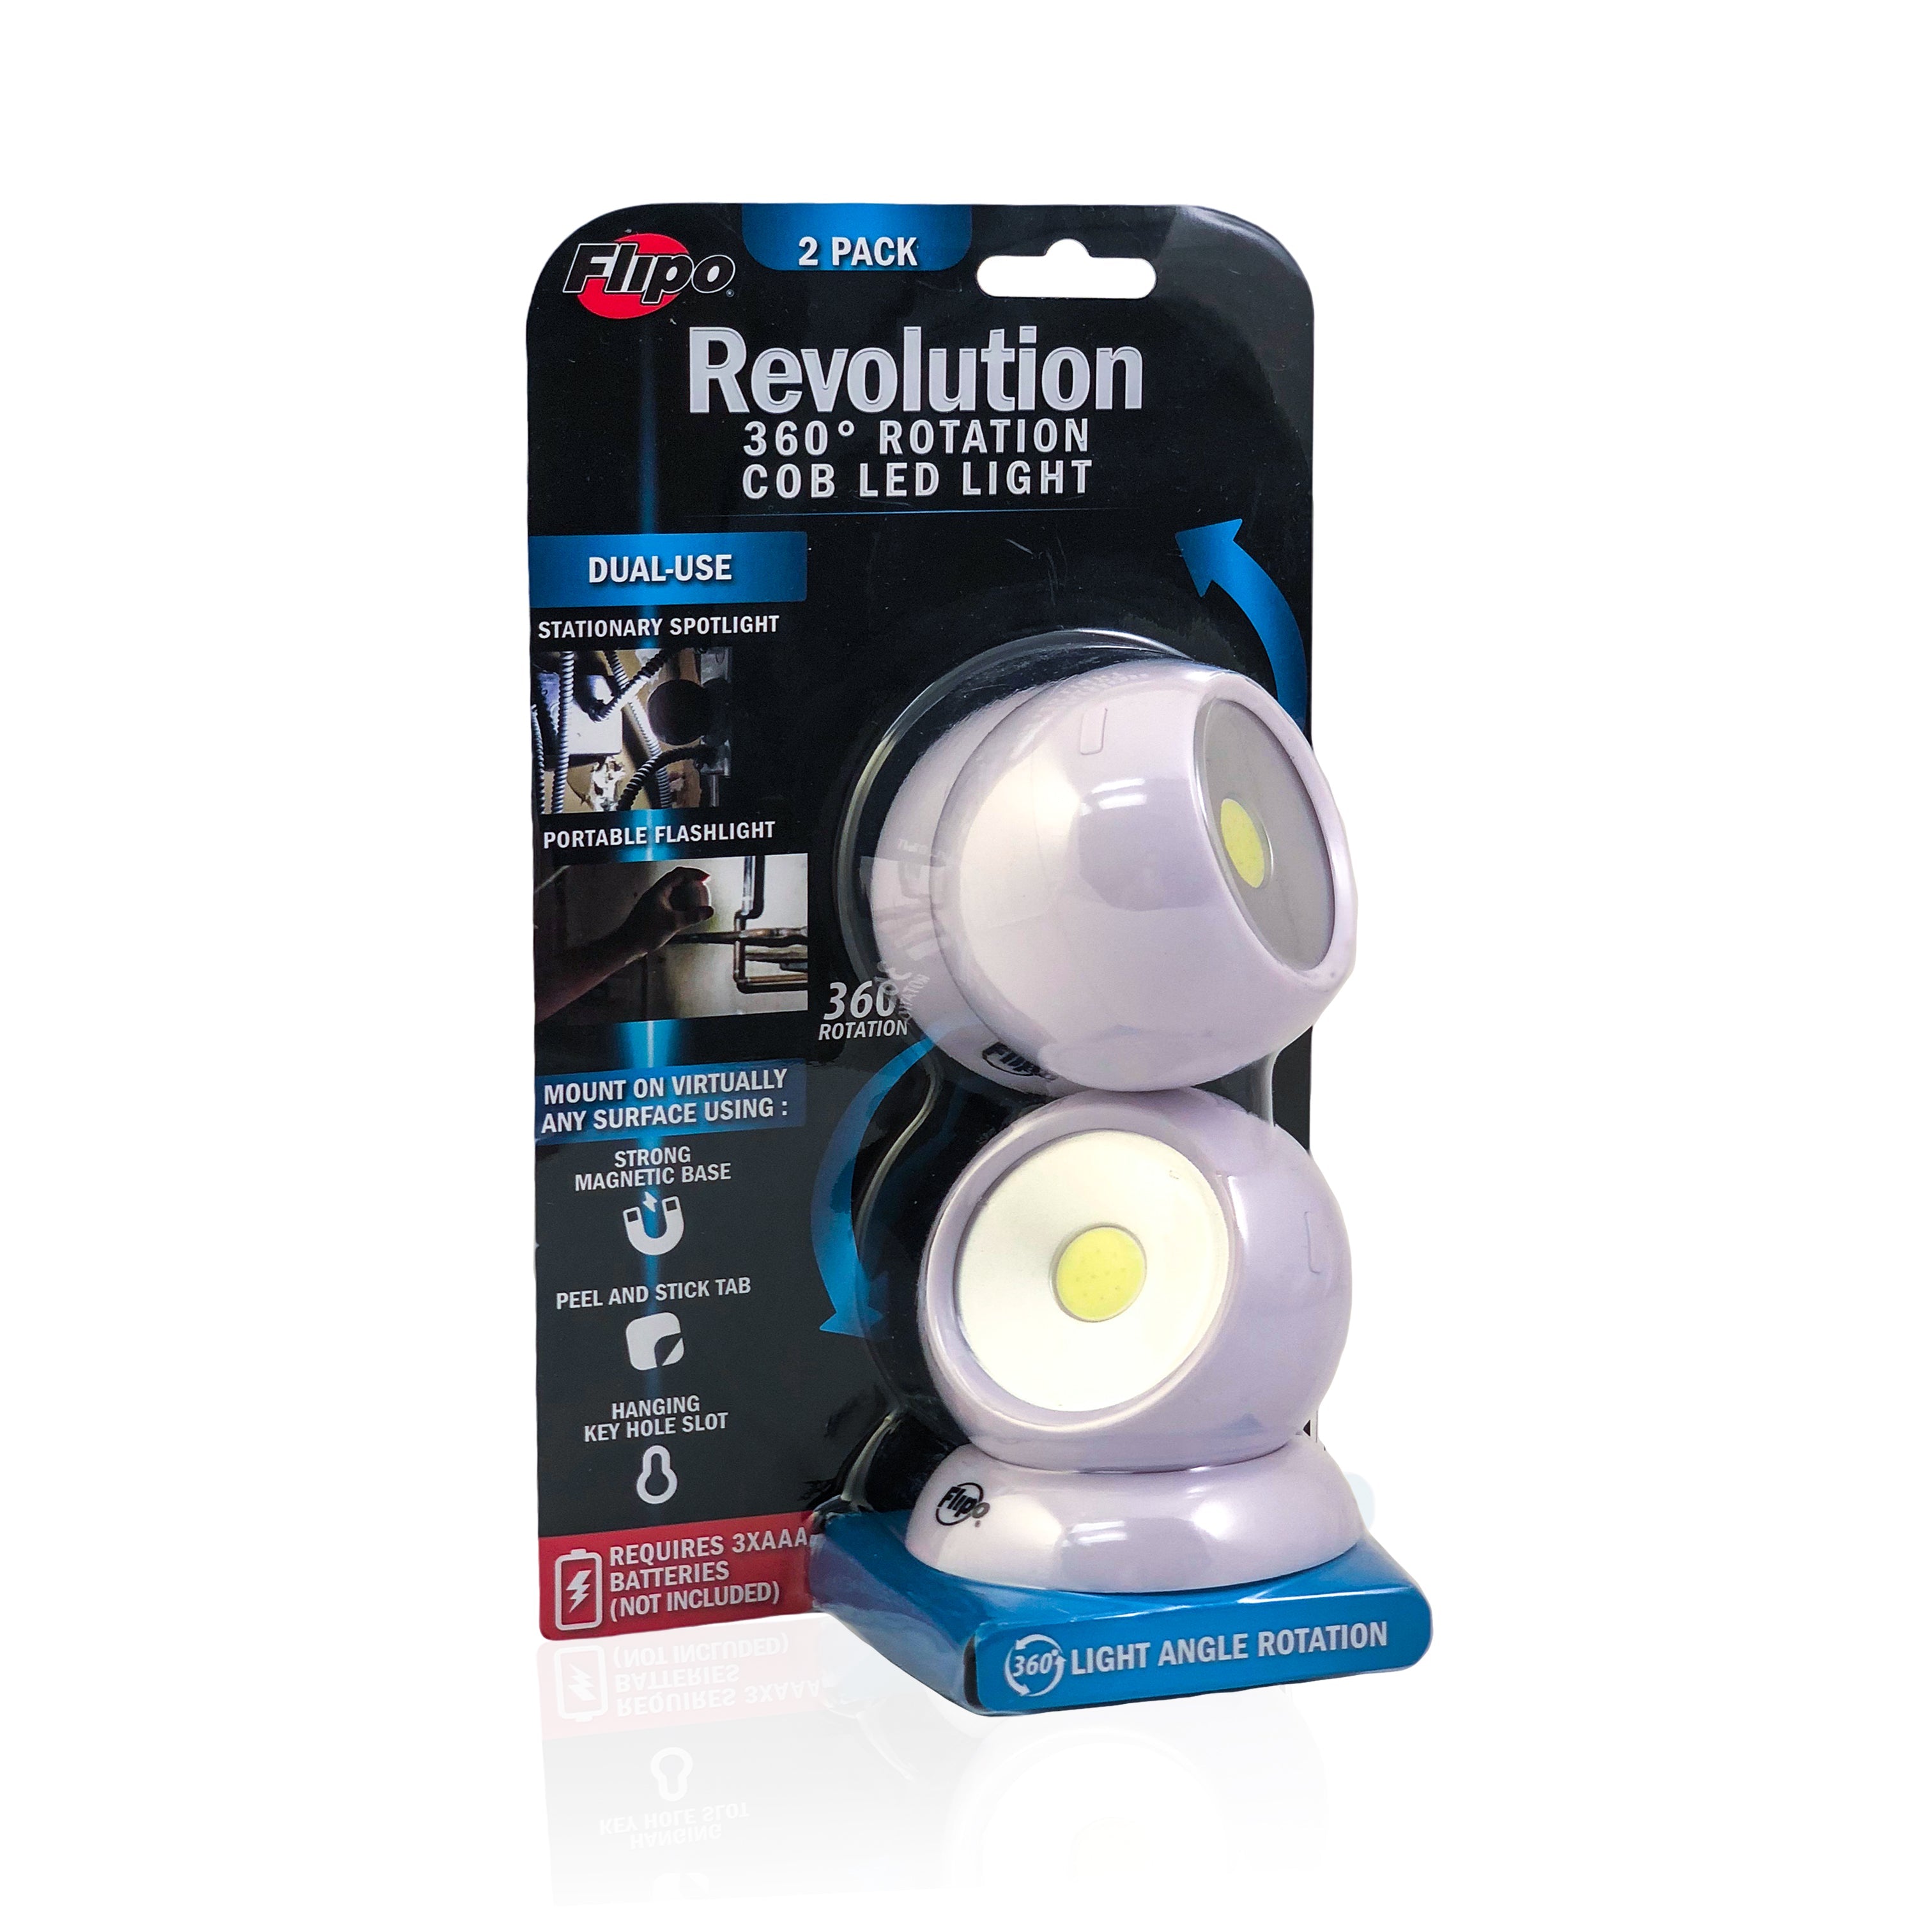 Revolution - 360 Rotation COB LED Light 2 Pack